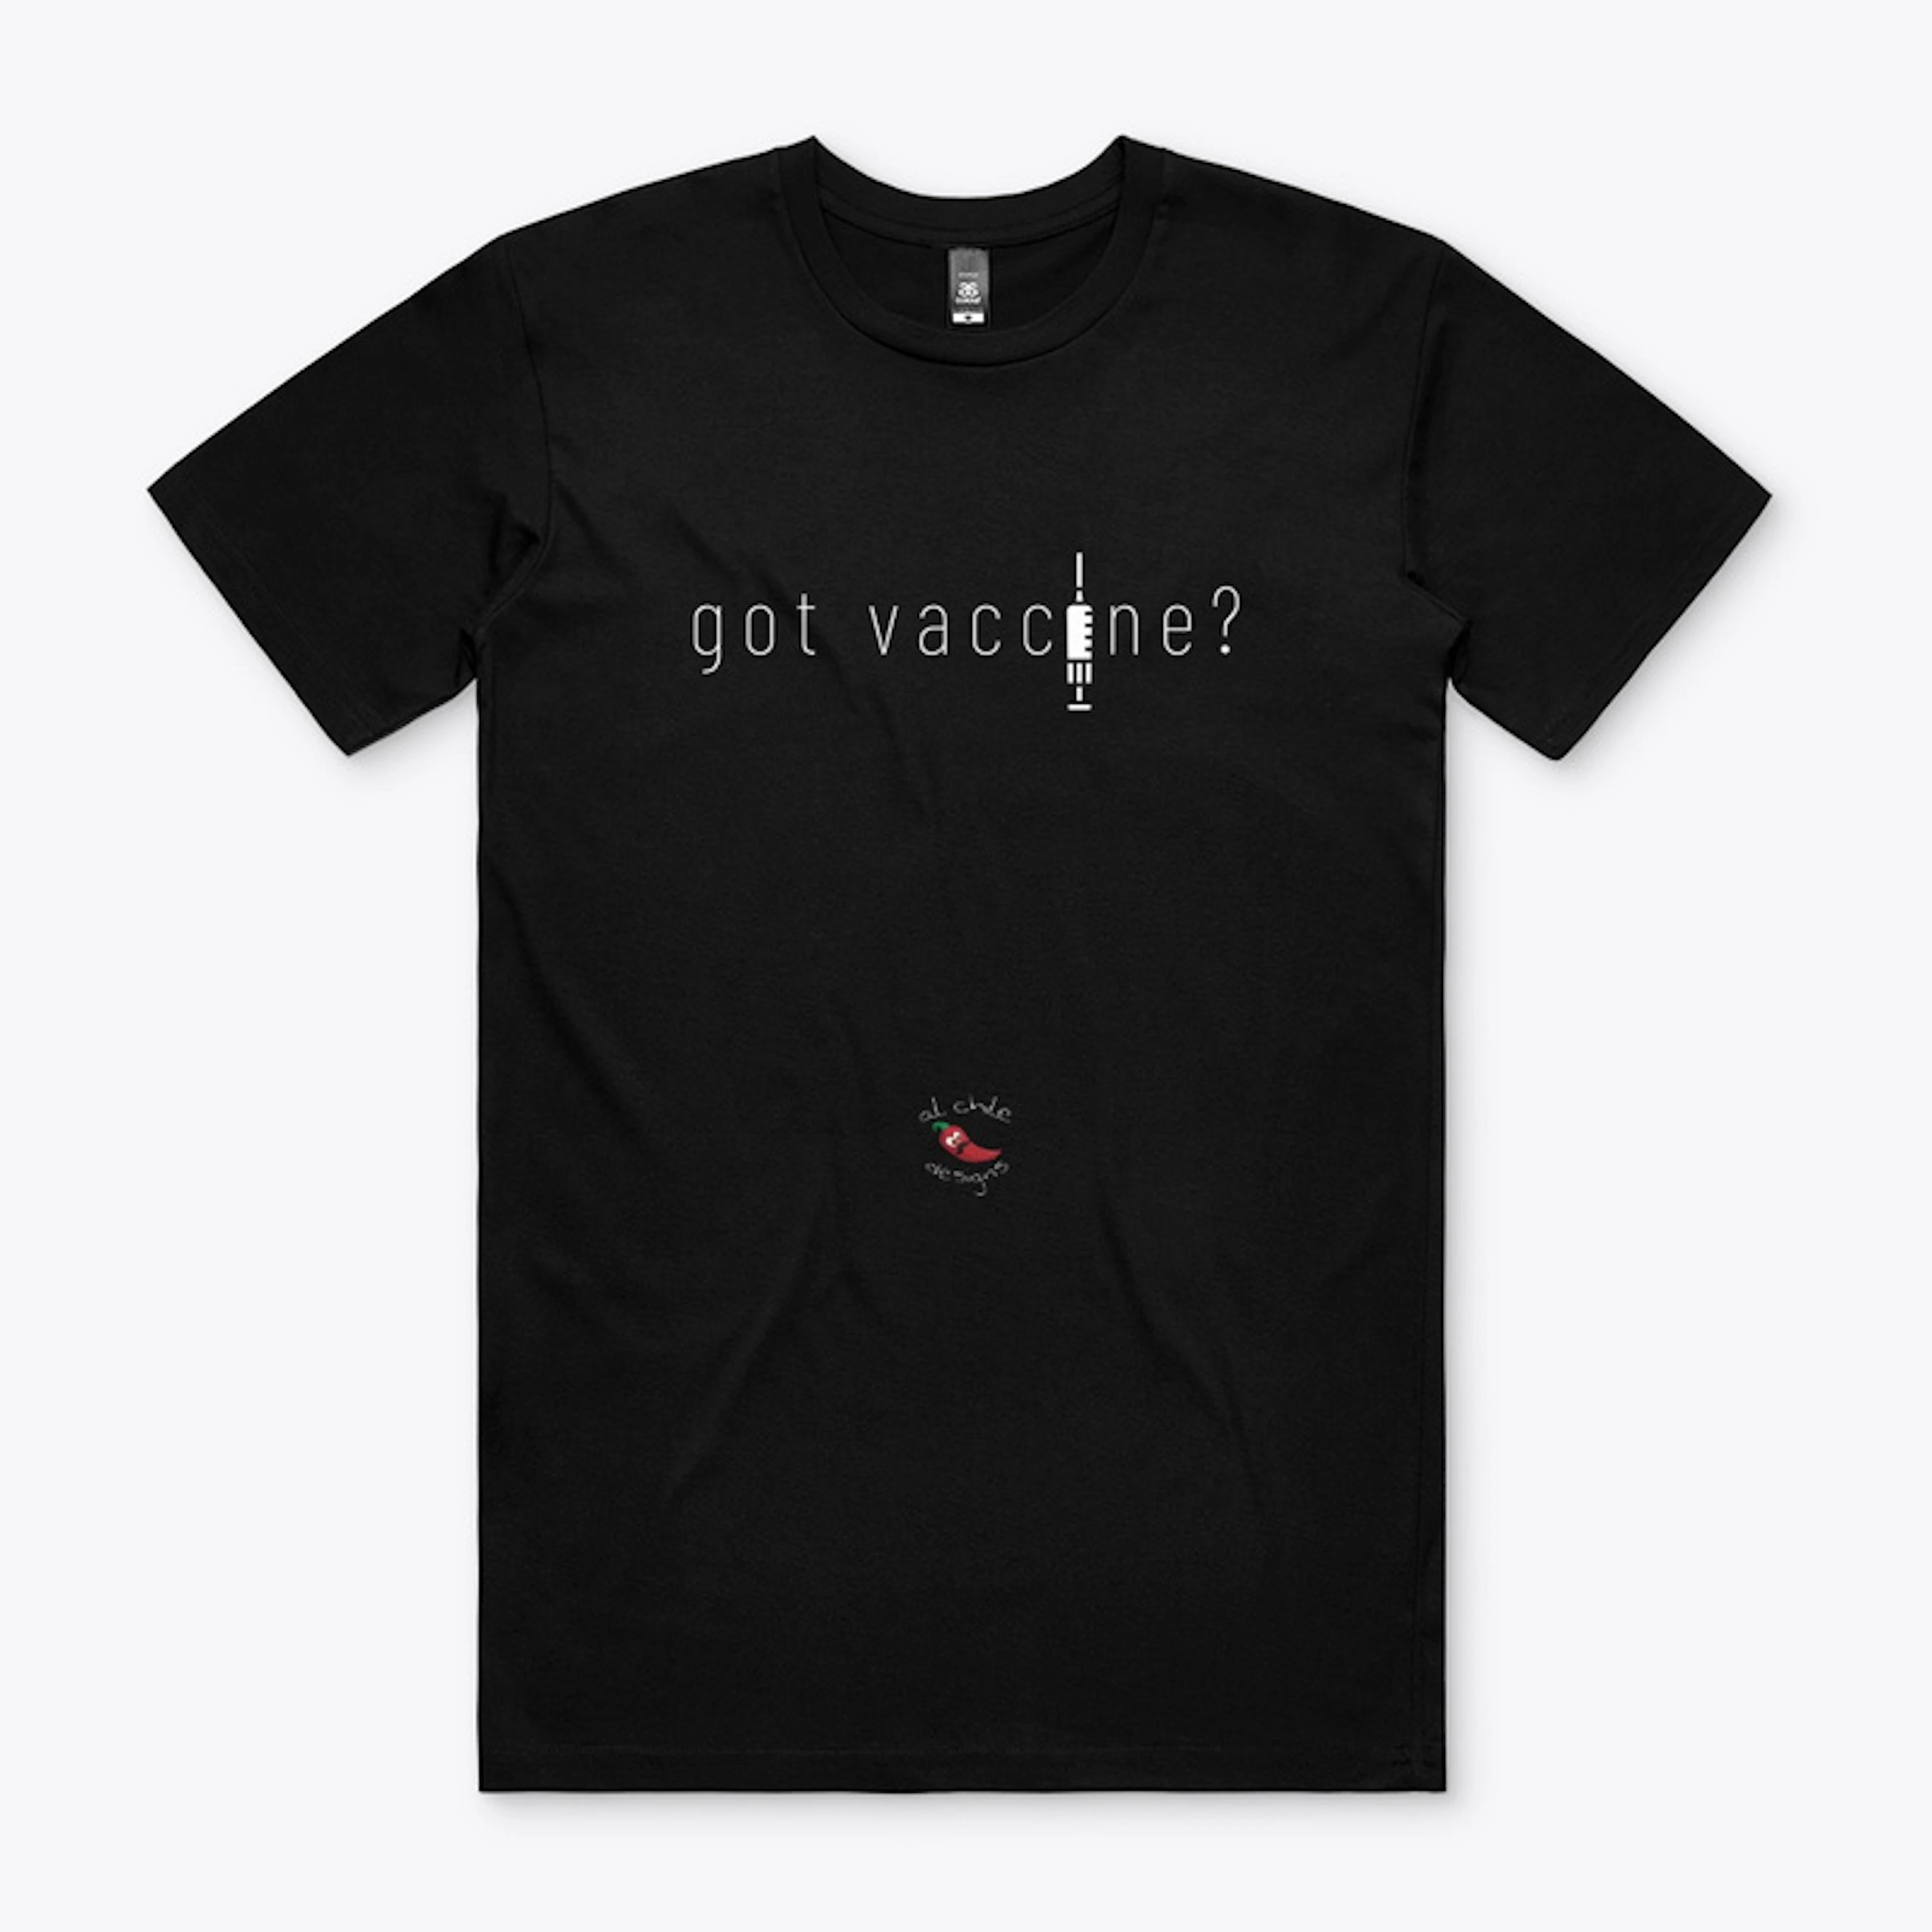 got vaccine?